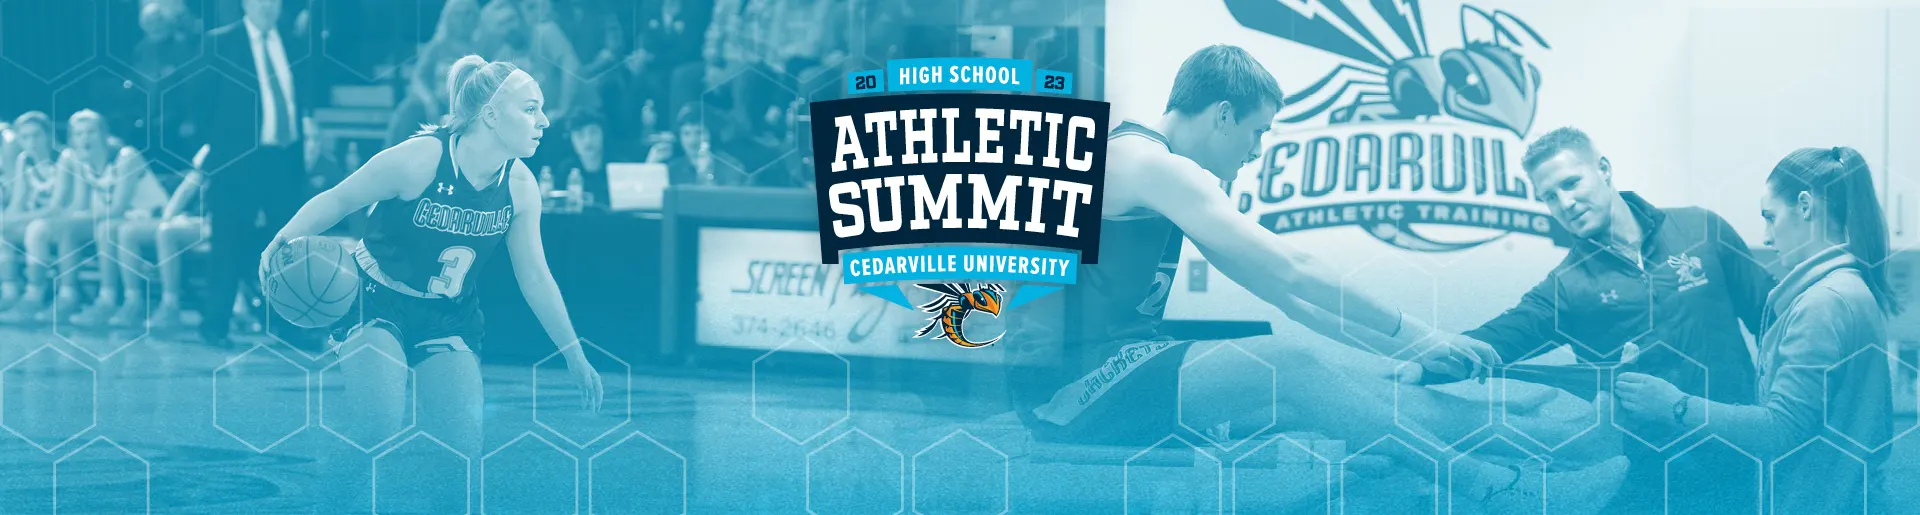 High School Athletic Summit - Cedarville University